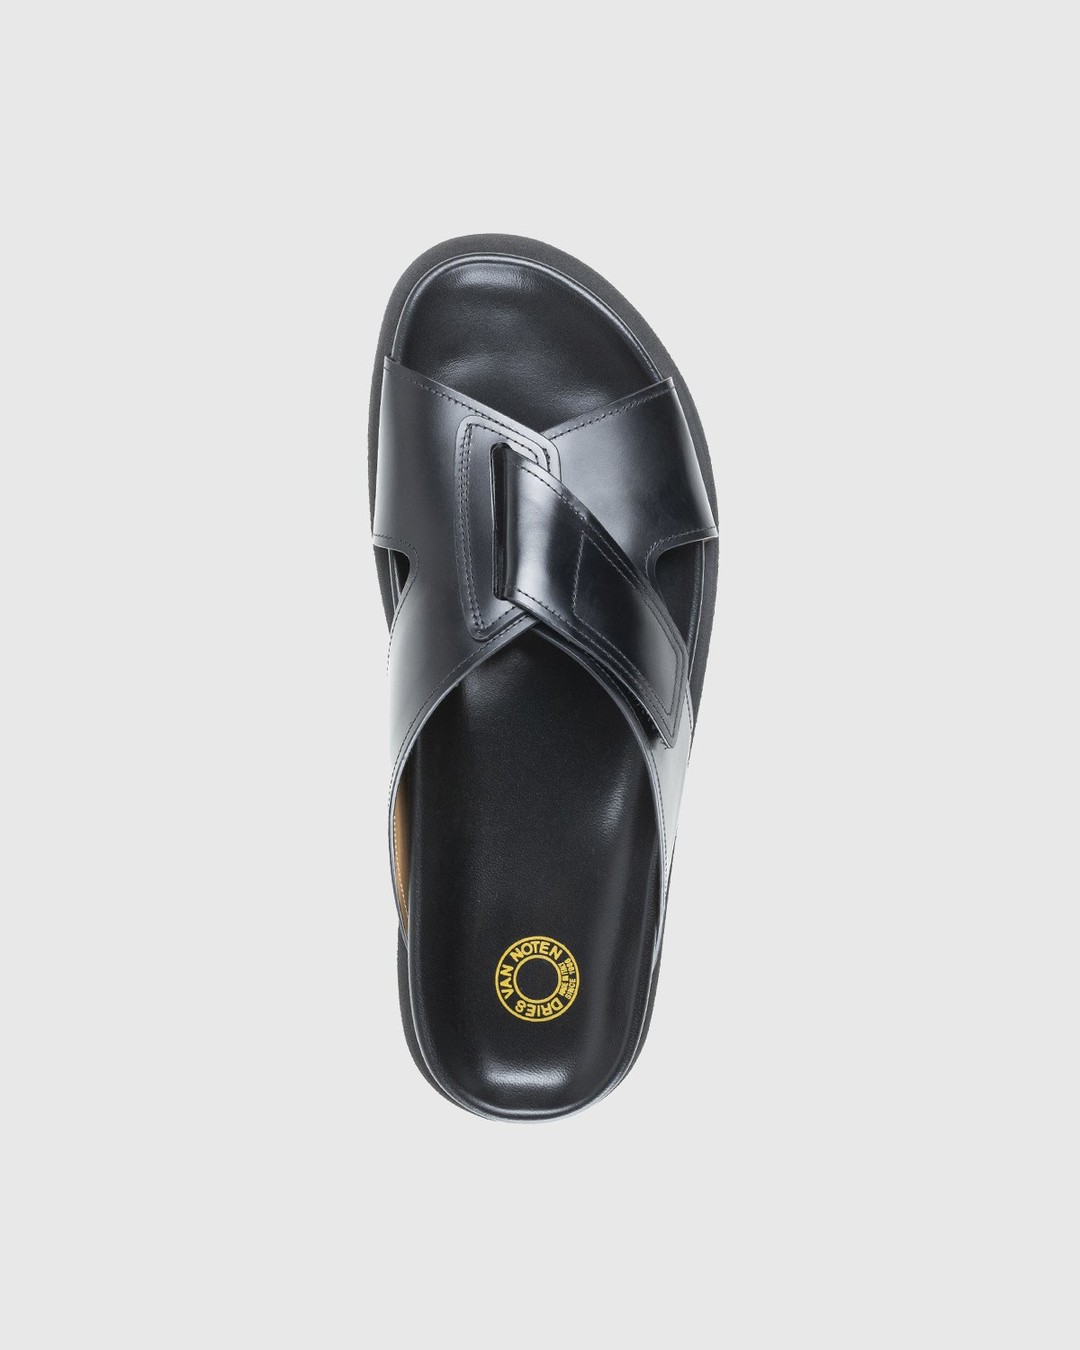 Dries van Noten – Leather Criss-Cross Sandals Black - Sandals - Black - Image 5